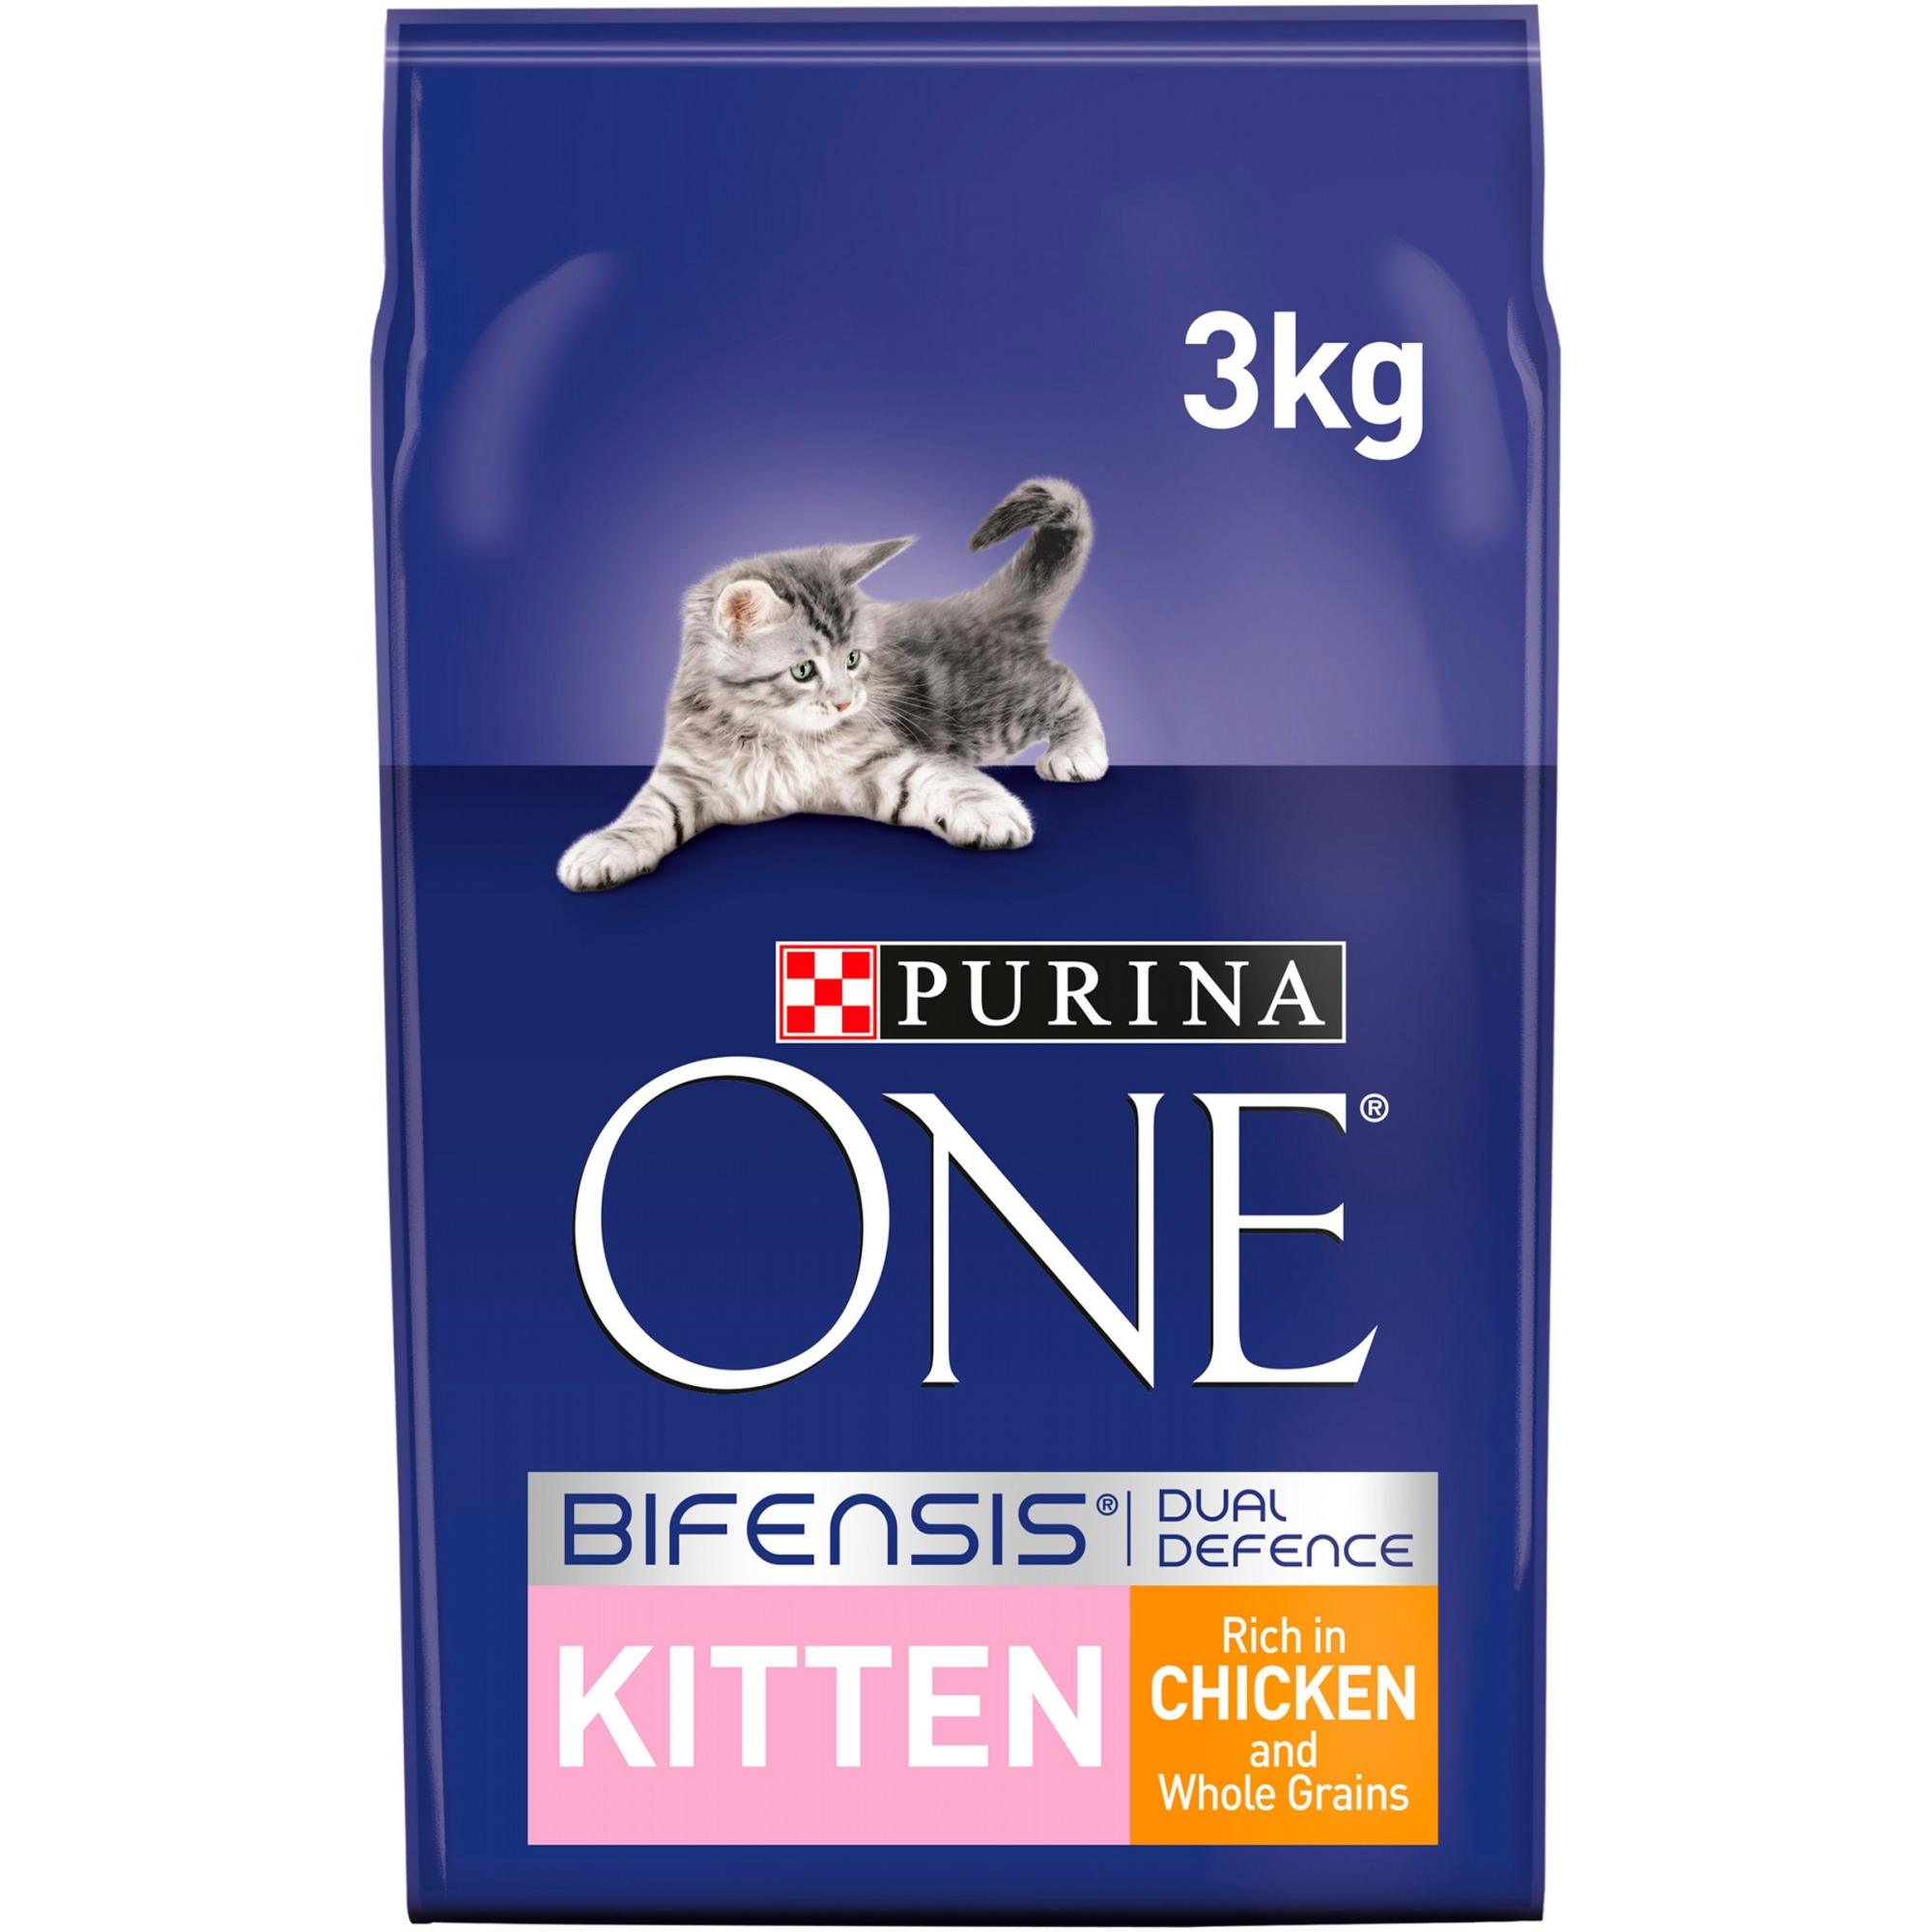 PURINA ONE 🐱 Kitten Chicken & Whole Grains Cat Food